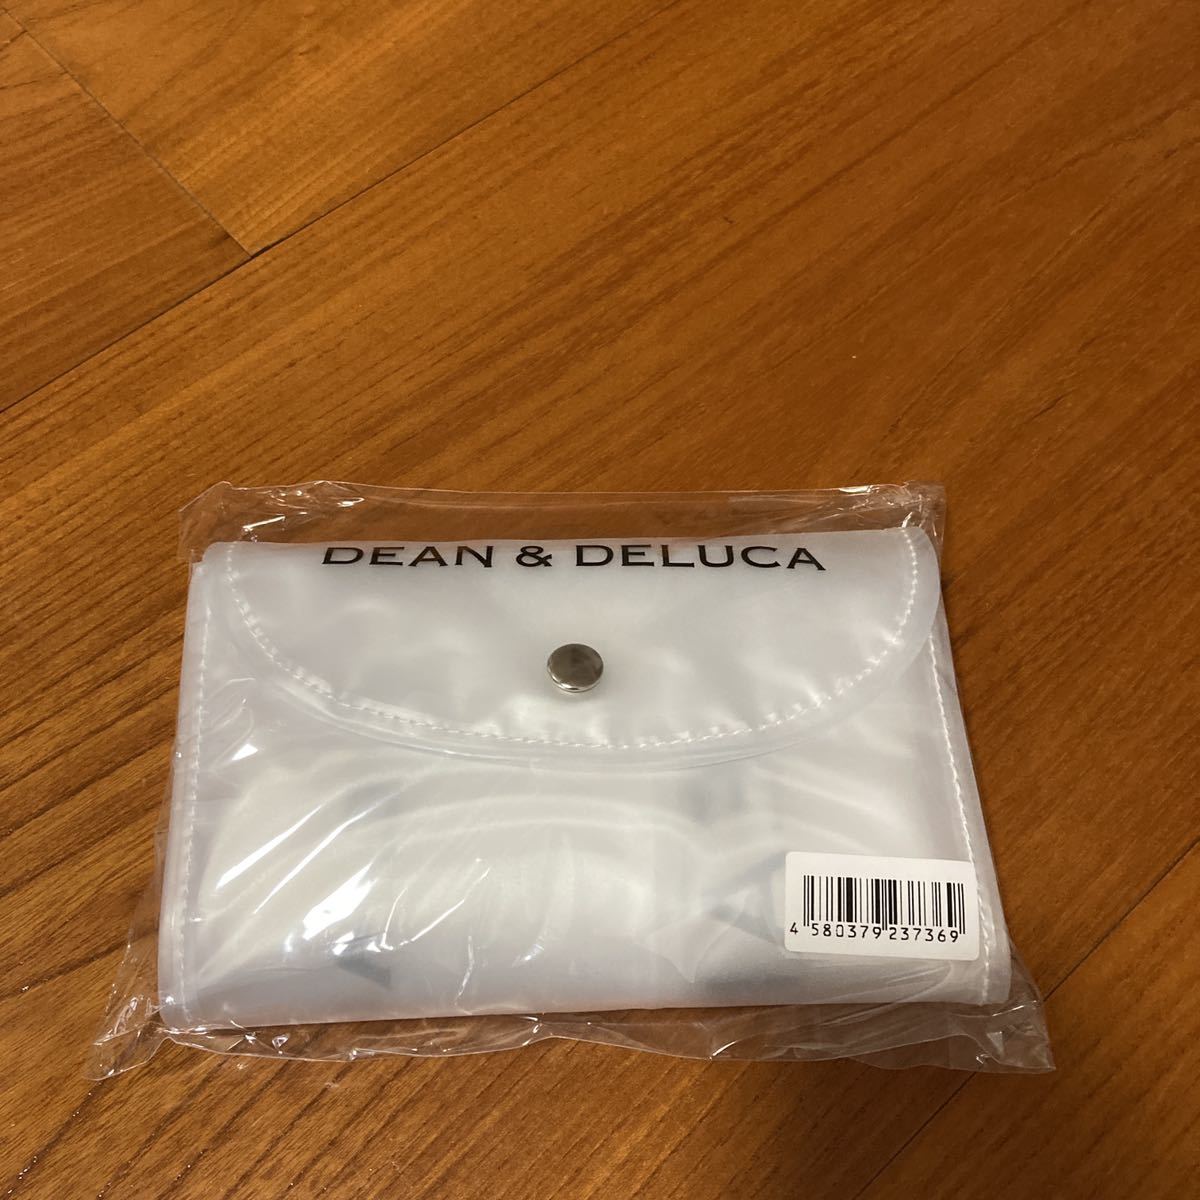 DEAN&DELUCA ショッピングバッグ クリア ディーンアンドデルーカ エコバッグ 限定 ホワイト ディーン&デルーカ 2020 dean deluca 完売品